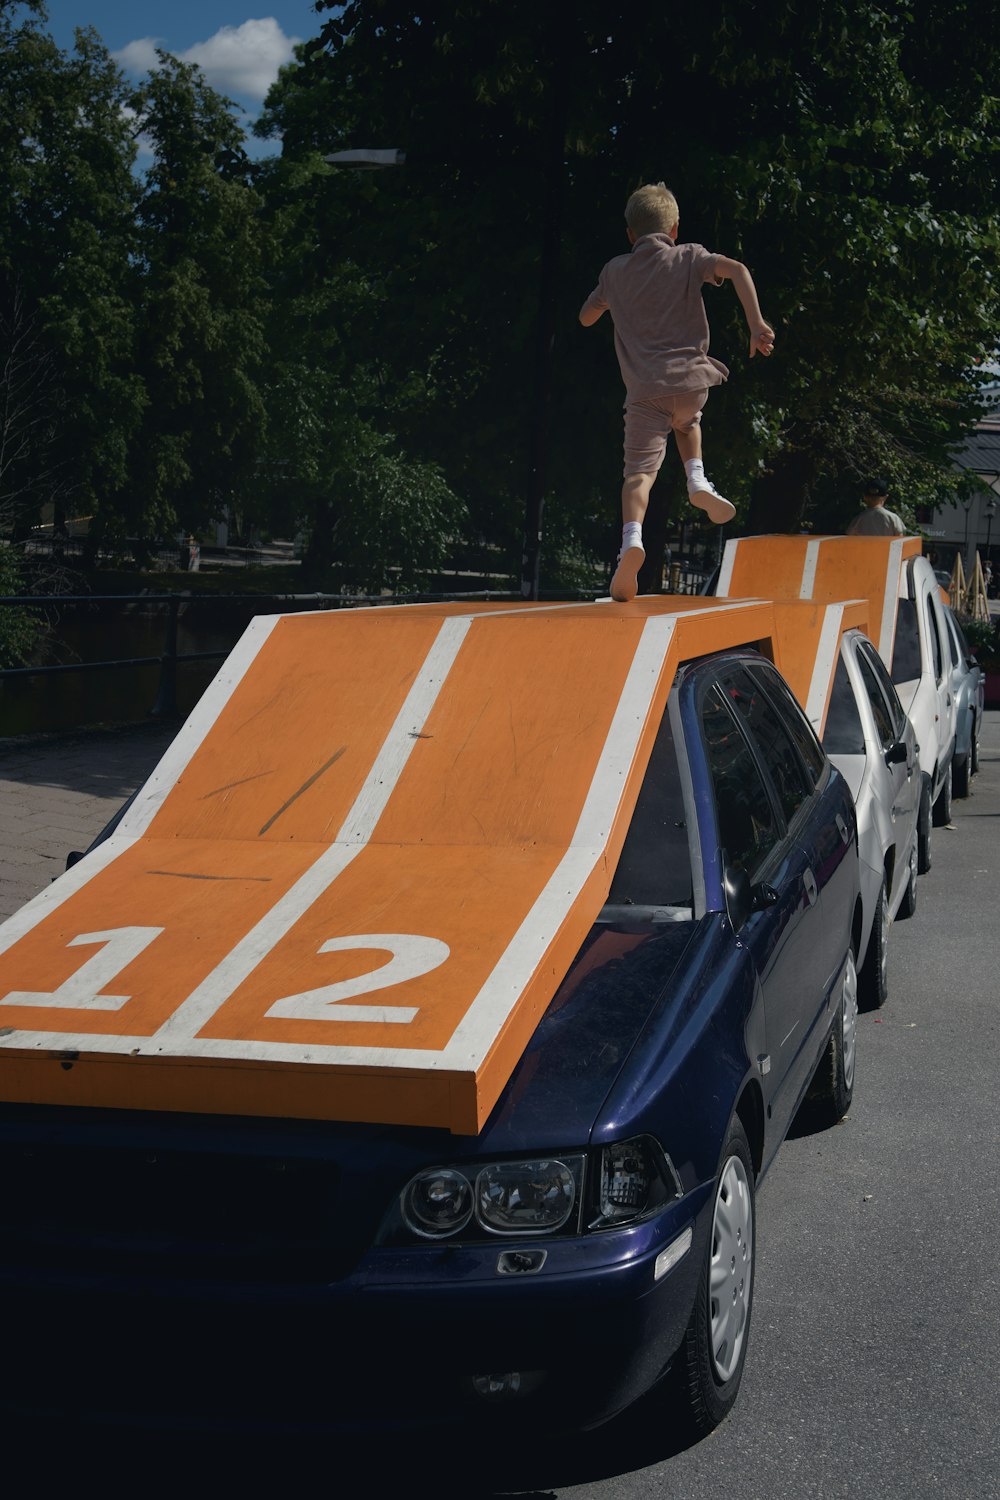 a boy jumping off a car